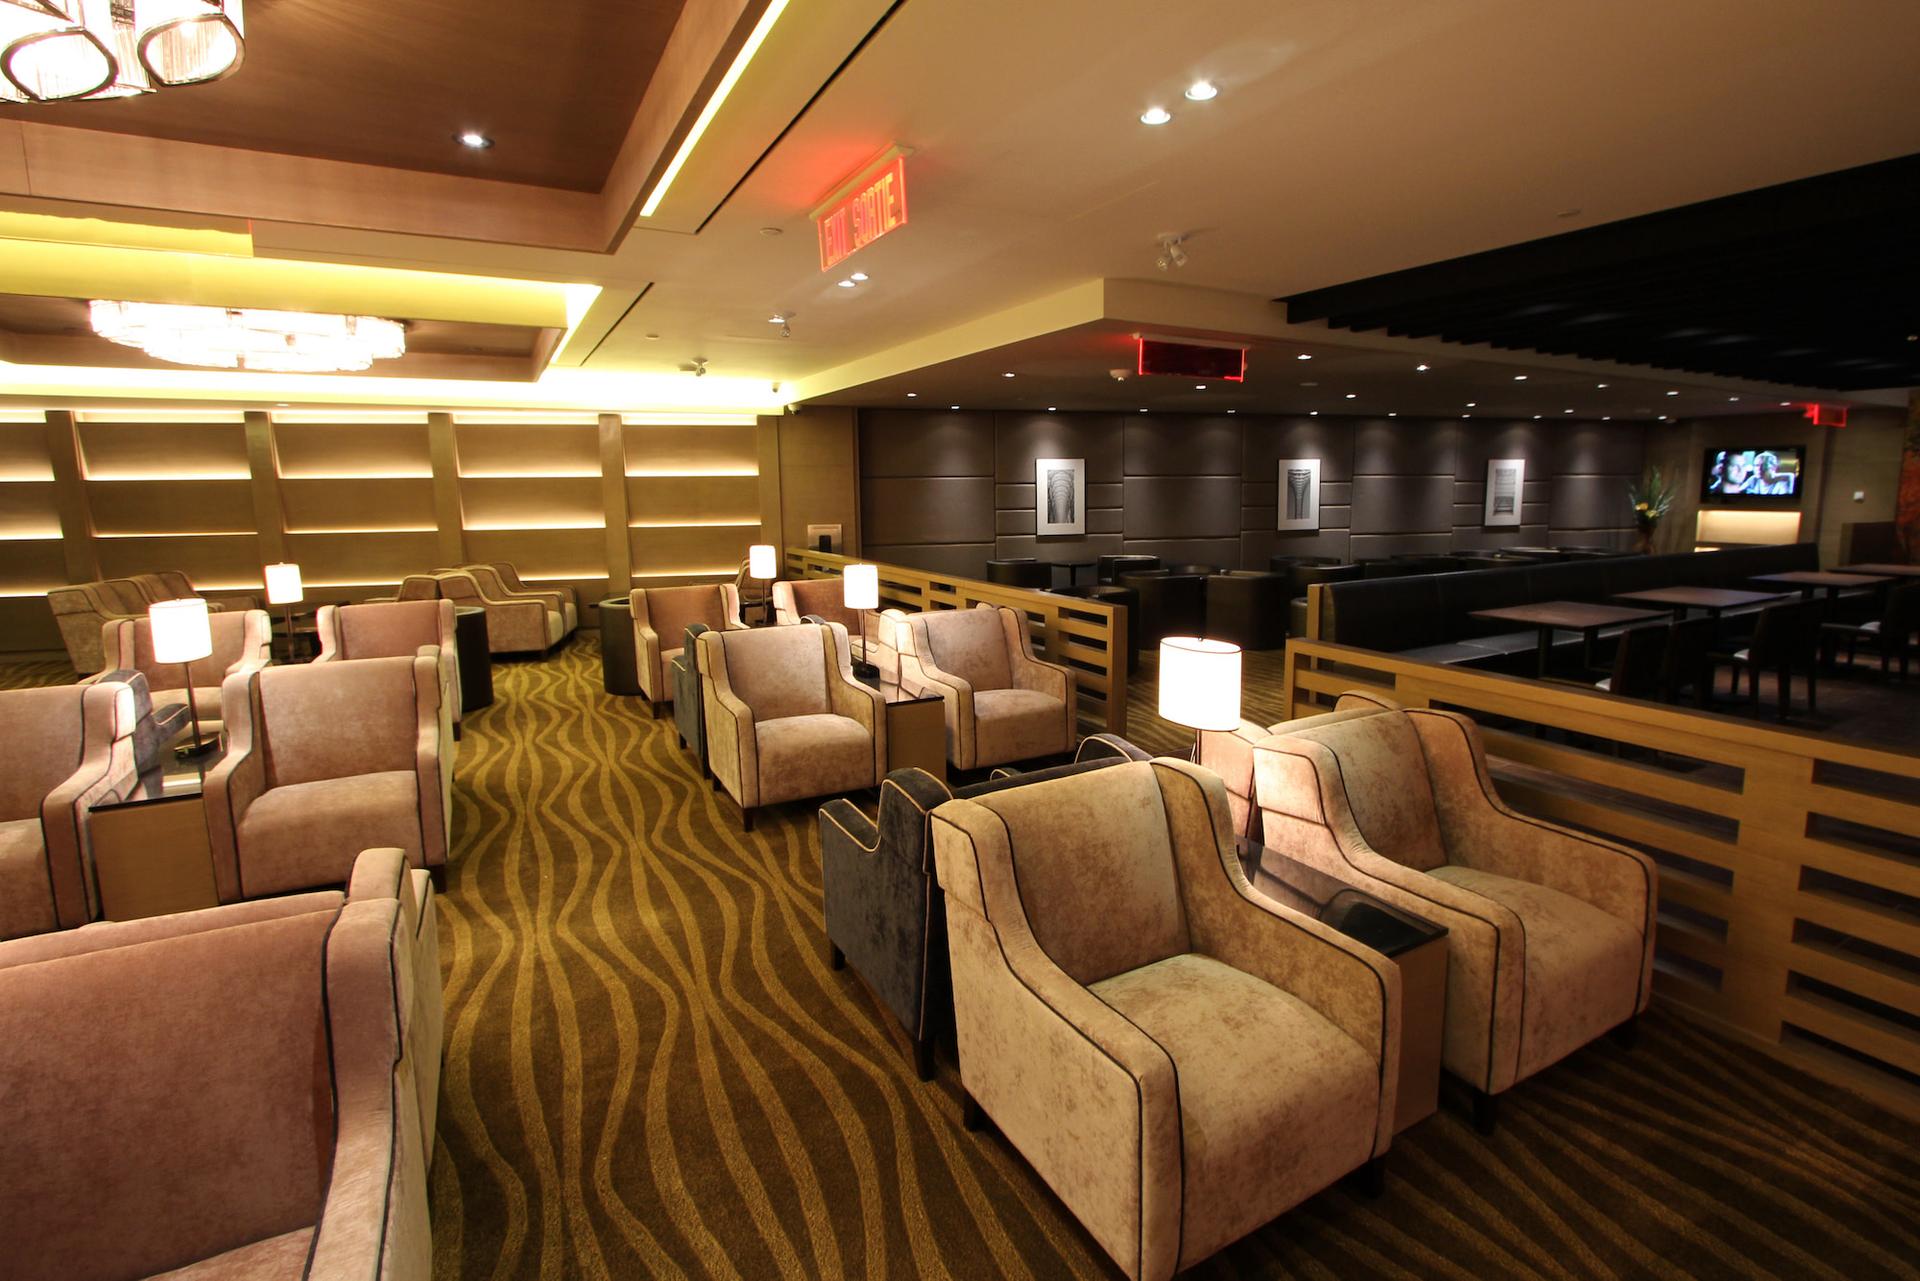 Plaza Premium Lounge image 3 of 44